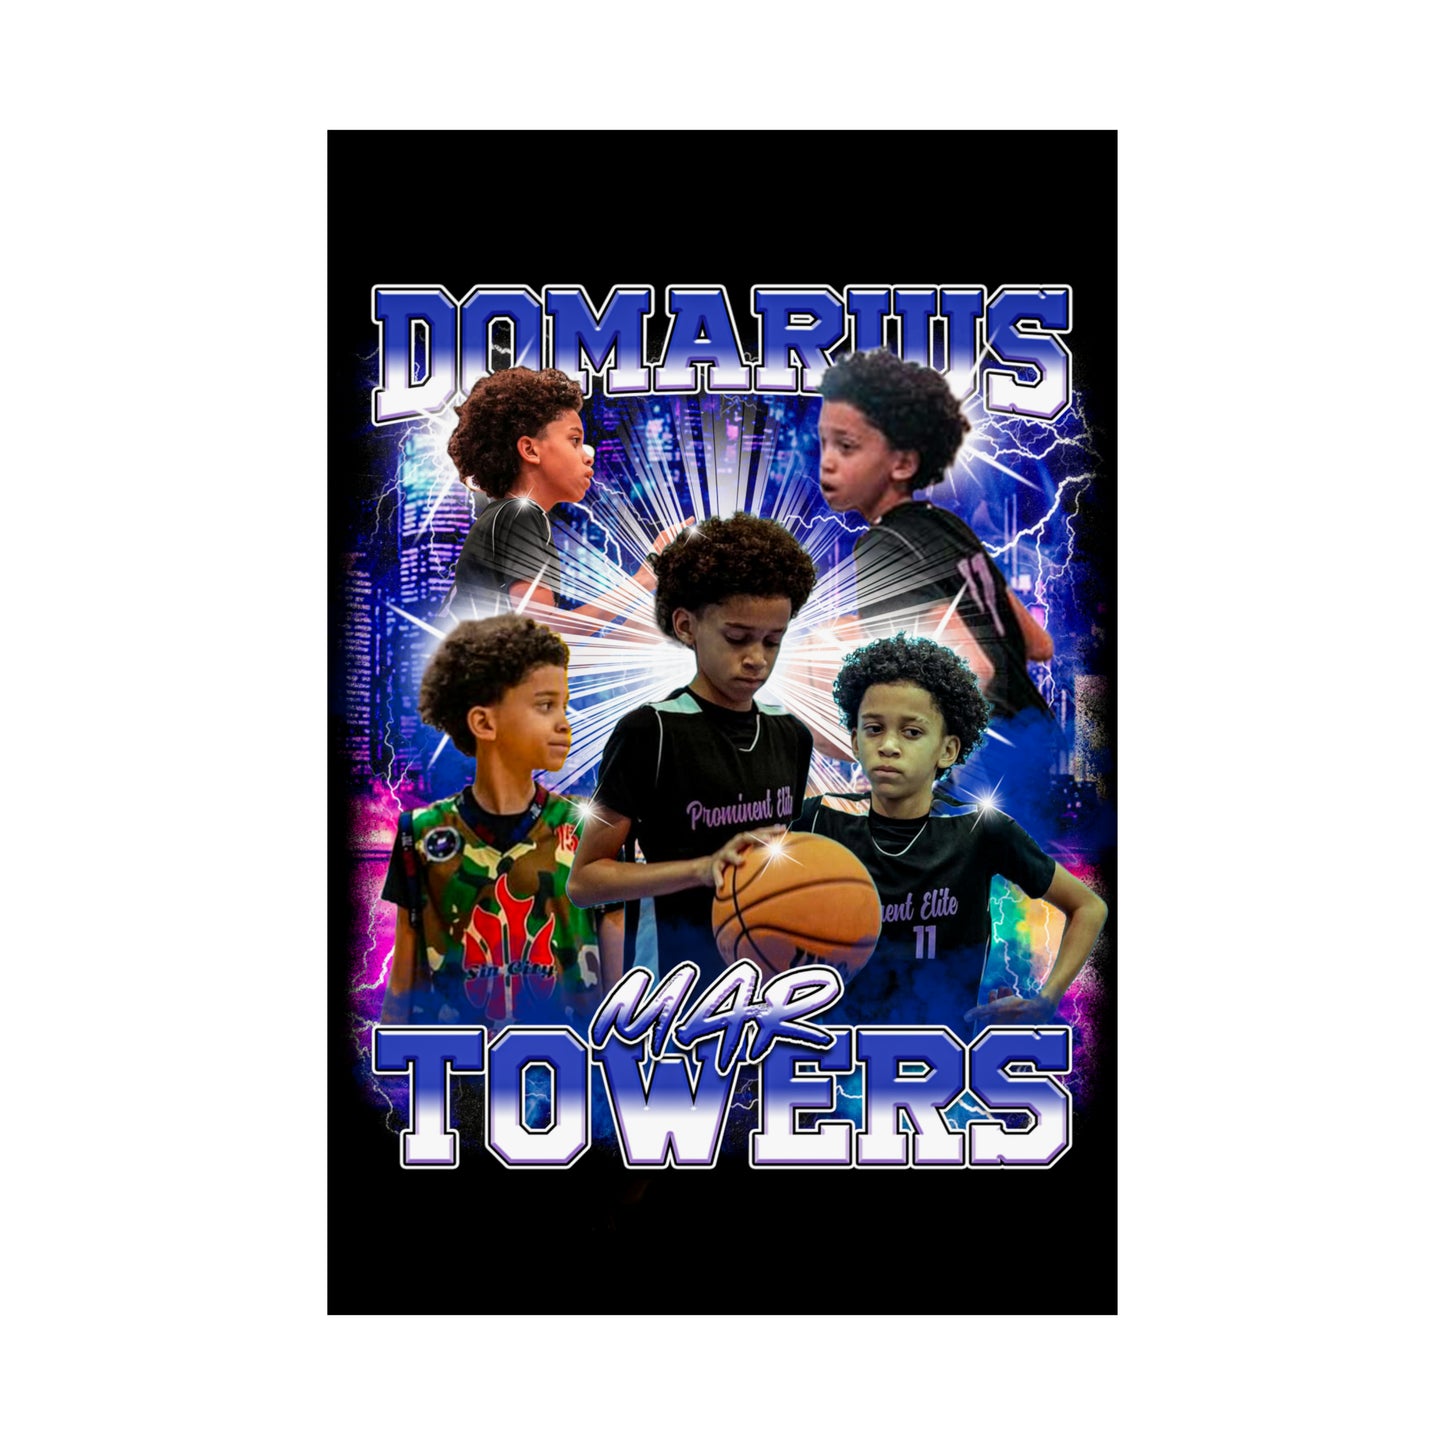 Domarius Towers Poster